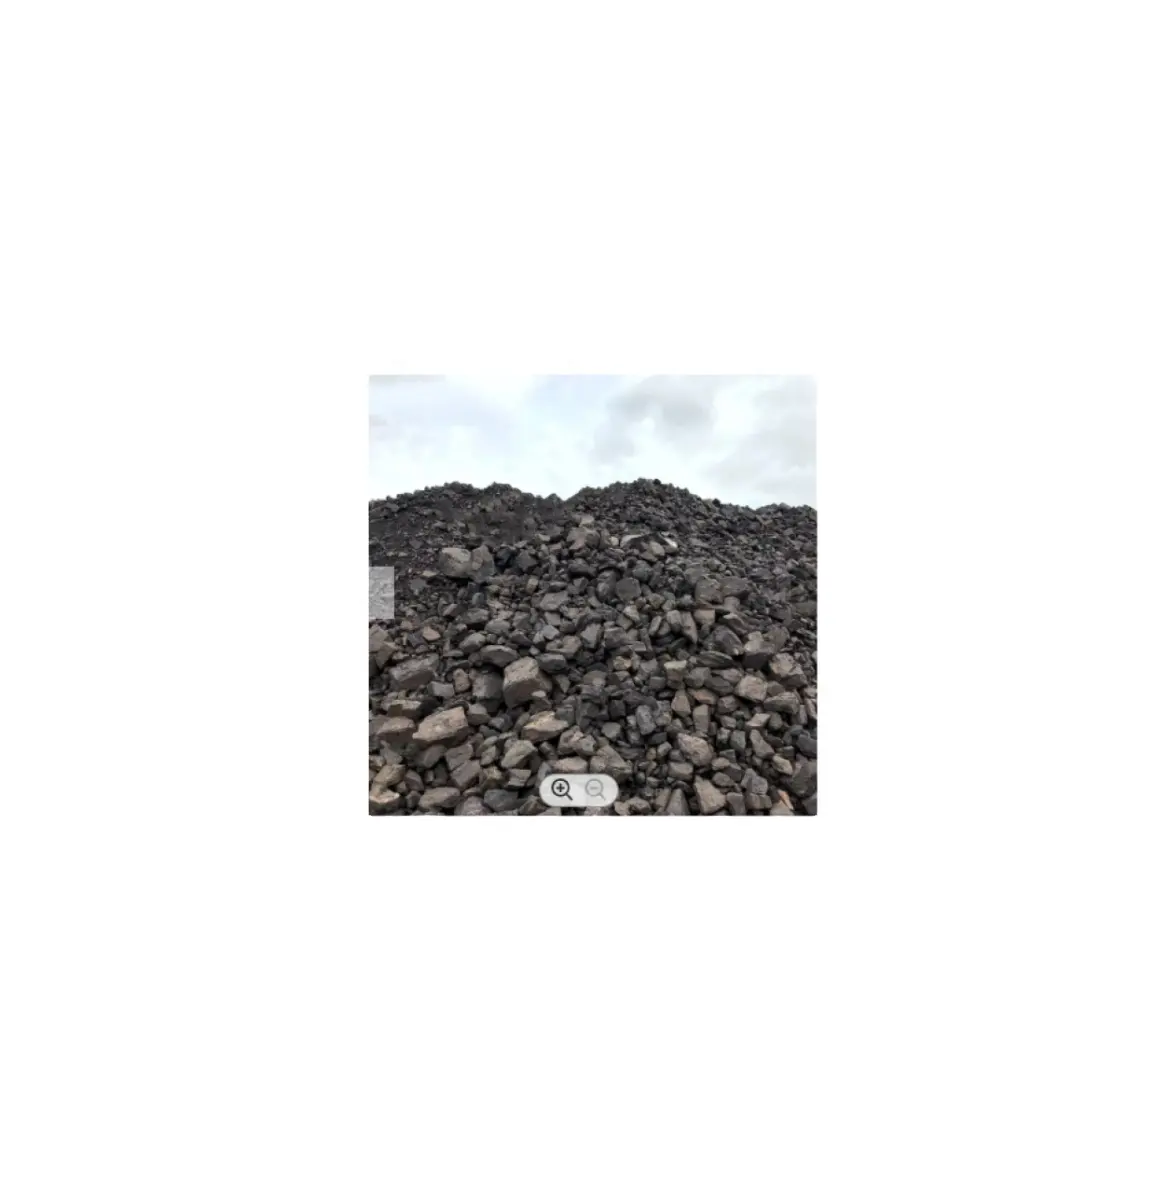 Wholesale custom private label manganese ore 42% - 44%  manganese ore lumps brown 25kg grades of 18% to 52% manganese (Mn)